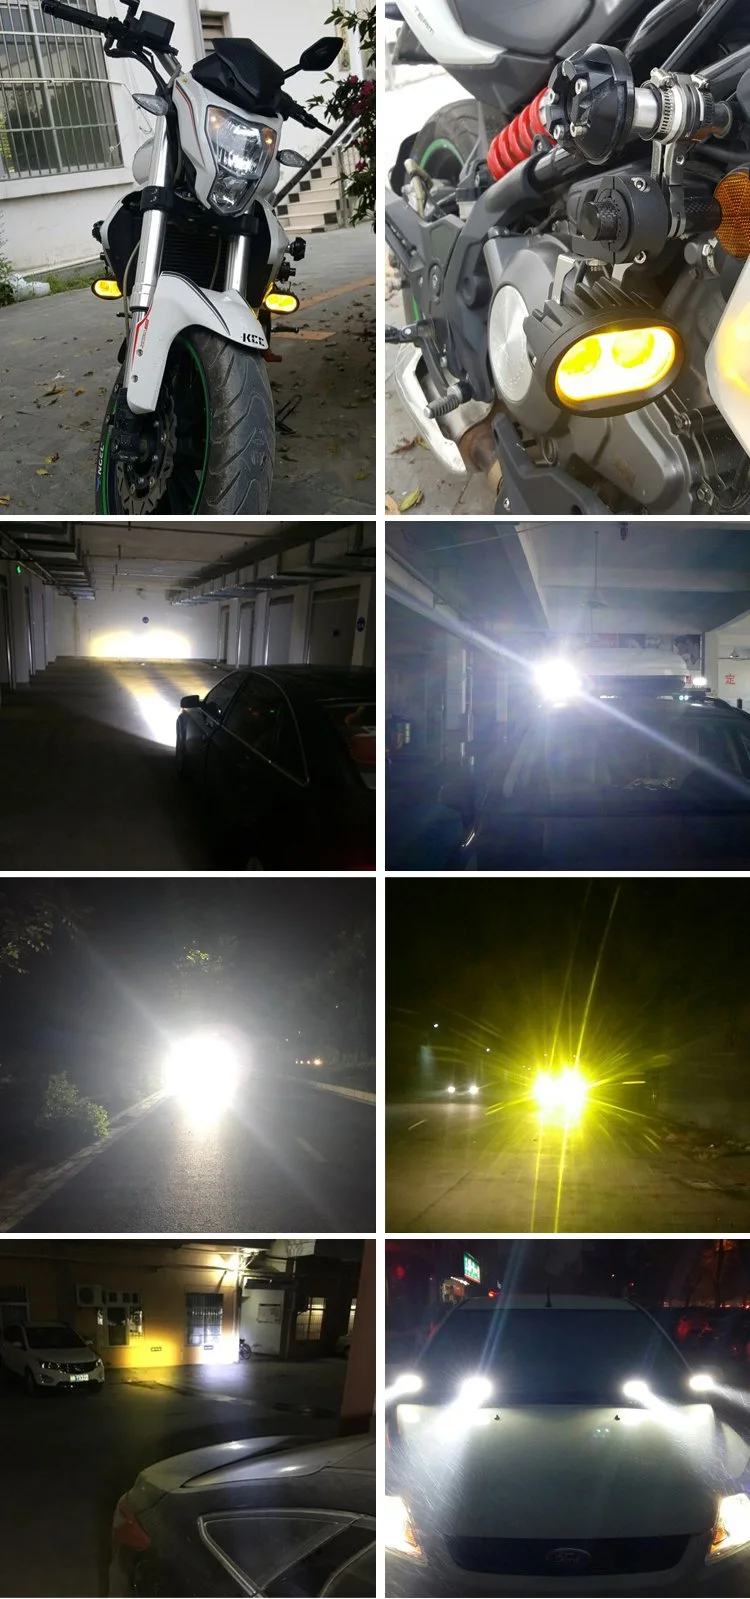 48W Epistar IP68 LED Headlight Work Light LED for Truck/Car/Offroad